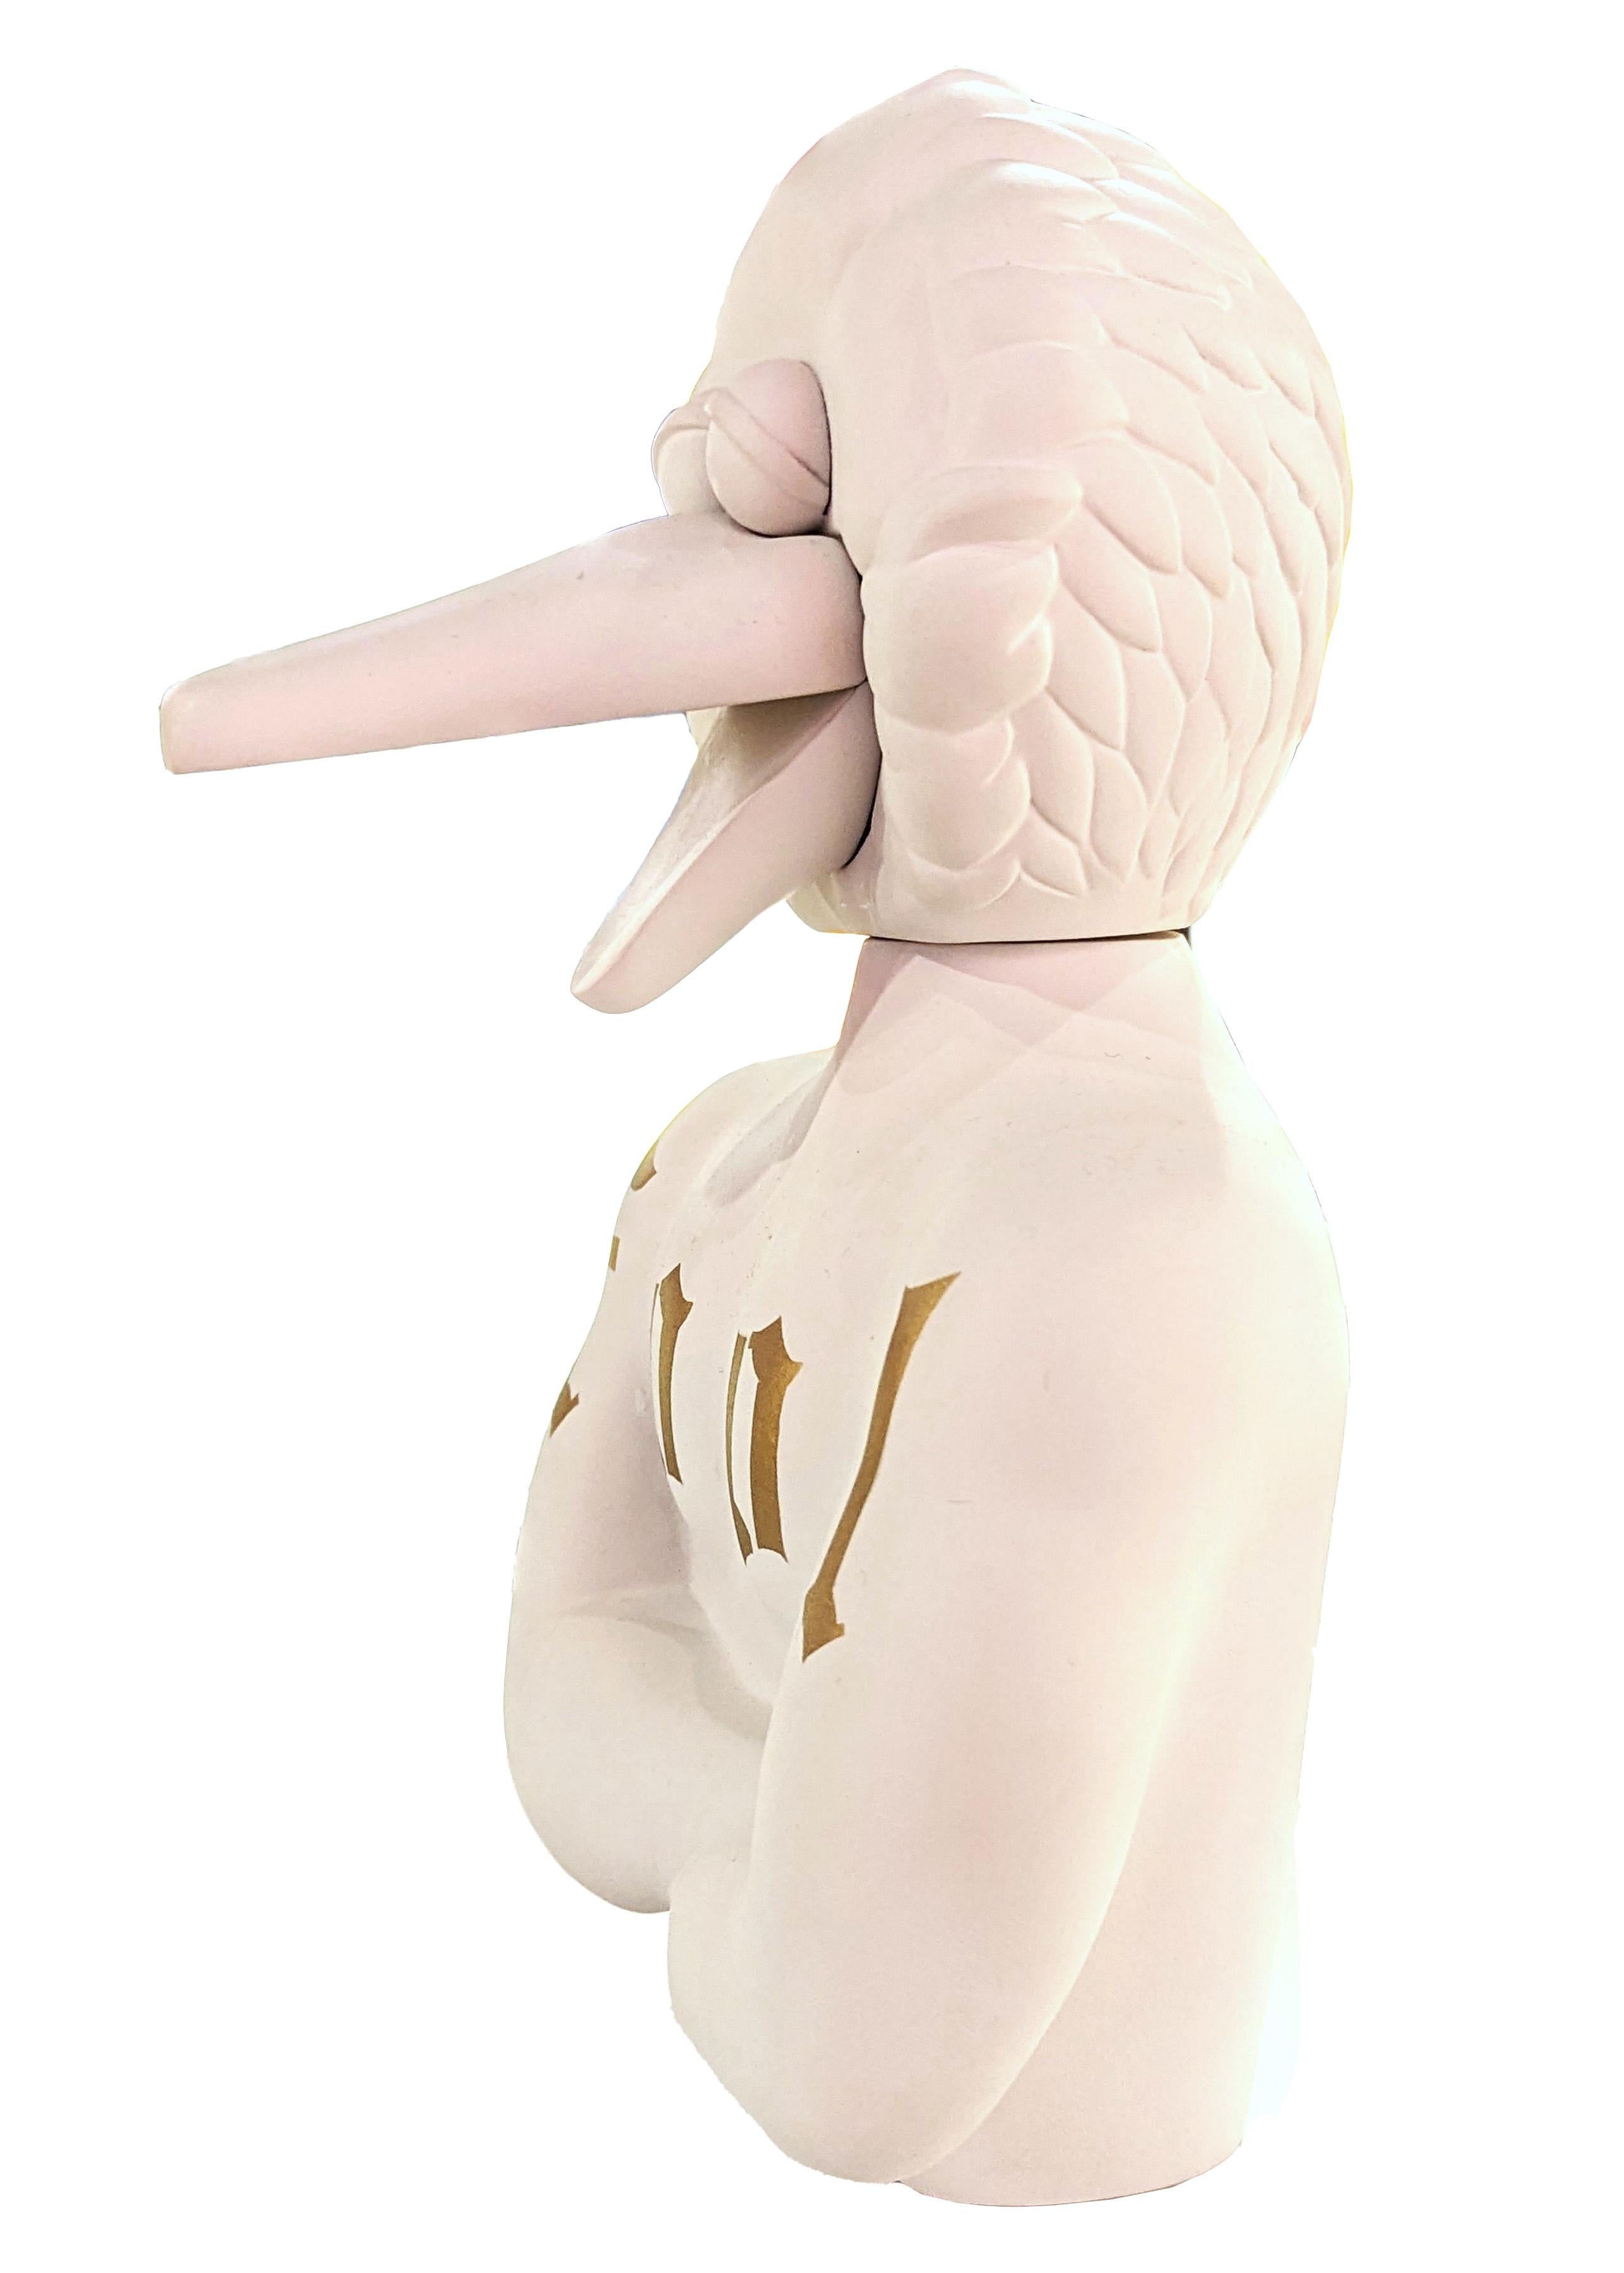 “Big Bad Bird” Contemporary Resin Pop Culture Sesame Street Character Sculpture For Sale 1